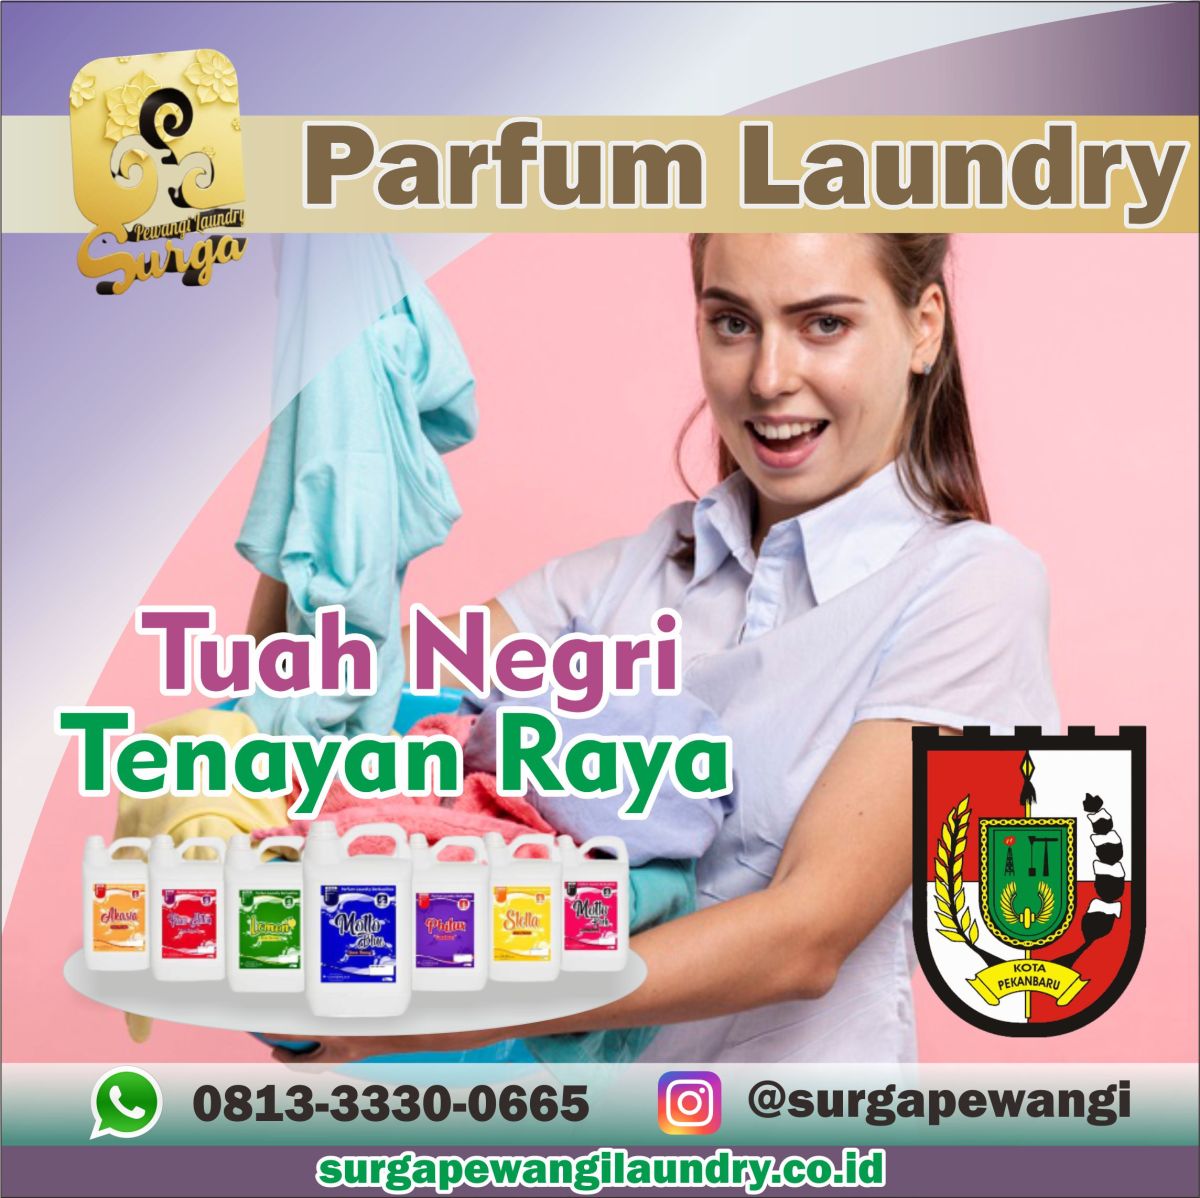 Parfum Laundry Tuah Negri, Tenayan Raya